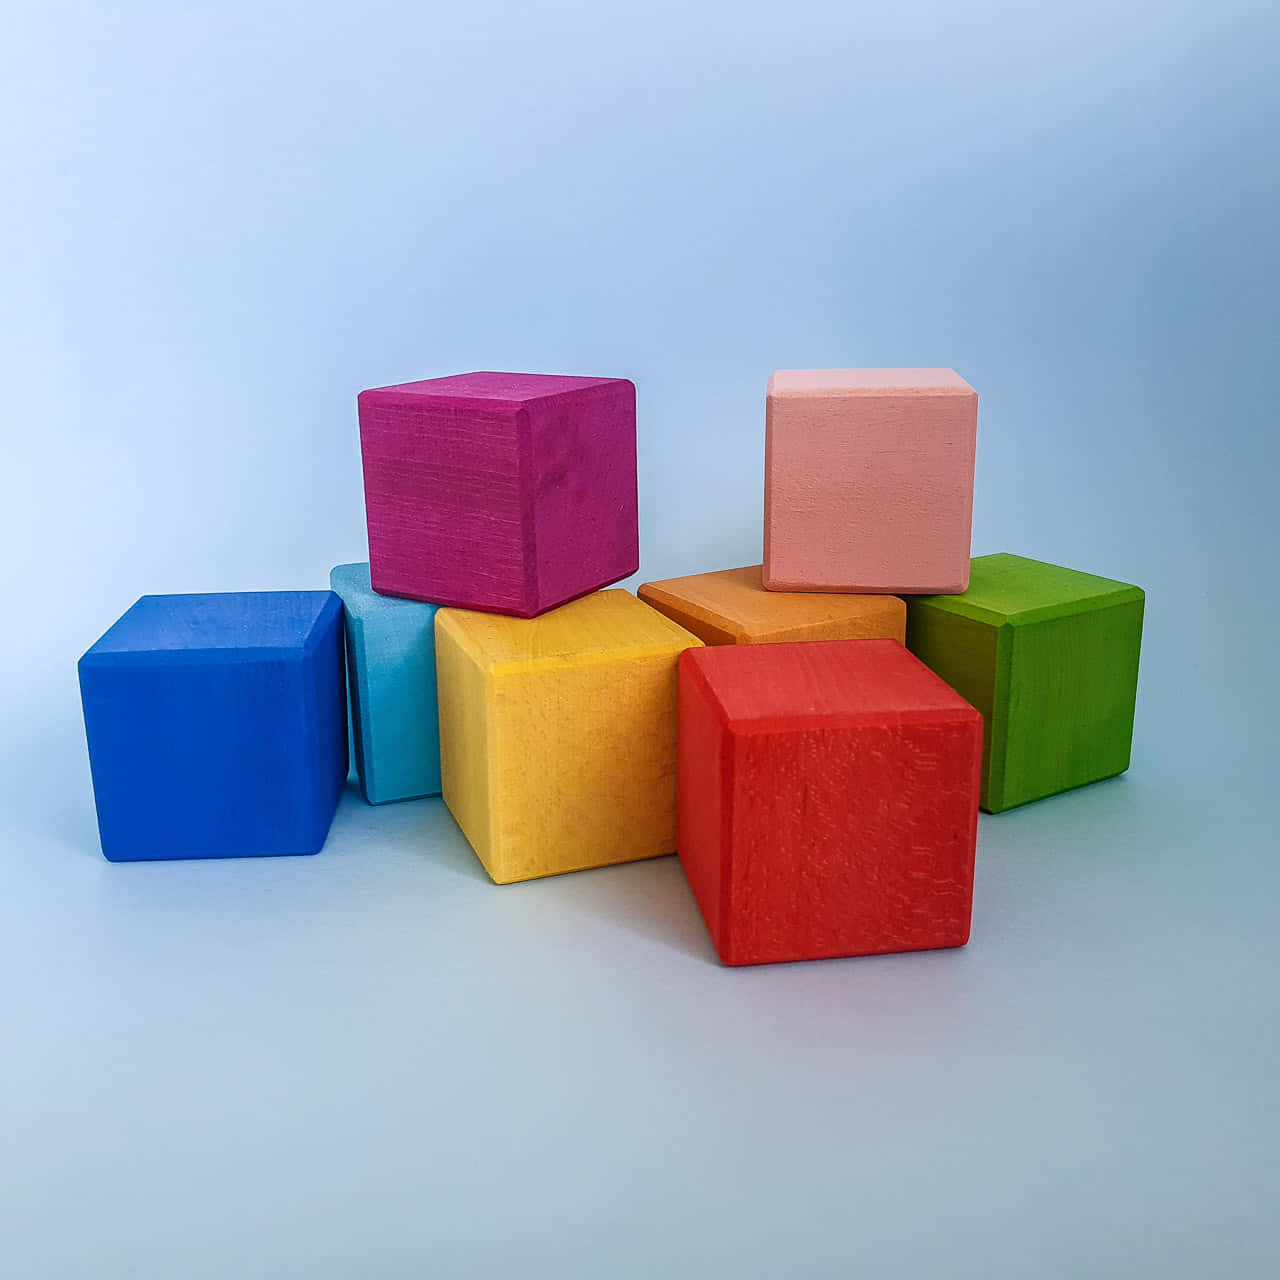 Colorful Wooden Blocks - Png, Jpg, Jpeg